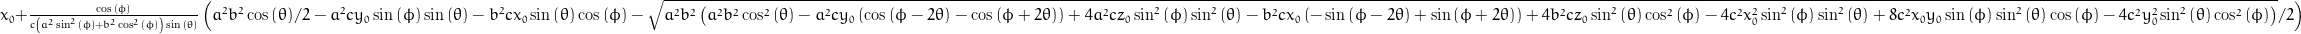 x_{0} + \frac{\cos{\left (\phi \right )}}{c \left(a^{2} \sin^{2}{\left (\phi \right )} + b^{2} \cos^{2}{\left (\phi \right )}\right) \sin{\left (\theta \right )}} \left(\frac{a^{2} b^{2}}{2} \cos{\left (\theta \right )} - a^{2} c y_{0} \sin{\left (\phi \right )} \sin{\left (\theta \right )} - b^{2} c x_{0} \sin{\left (\theta \right )} \cos{\left (\phi \right )} - \frac{1}{2} \sqrt{a^{2} b^{2} \left(a^{2} b^{2} \cos^{2}{\left (\theta \right )} - a^{2} c y_{0} \left(\cos{\left (\phi - 2 \theta \right )} - \cos{\left (\phi + 2 \theta \right )}\right) + 4 a^{2} c z_{0} \sin^{2}{\left (\phi \right )} \sin^{2}{\left (\theta \right )} - b^{2} c x_{0} \left(- \sin{\left (\phi - 2 \theta \right )} + \sin{\left (\phi + 2 \theta \right )}\right) + 4 b^{2} c z_{0} \sin^{2}{\left (\theta \right )} \cos^{2}{\left (\phi \right )} - 4 c^{2} x_{0}^{2} \sin^{2}{\left (\phi \right )} \sin^{2}{\left (\theta \right )} + 8 c^{2} x_{0} y_{0} \sin{\left (\phi \right )} \sin^{2}{\left (\theta \right )} \cos{\left (\phi \right )} - 4 c^{2} y_{0}^{2} \sin^{2}{\left (\theta \right )} \cos^{2}{\left (\phi \right )}\right)}\right)